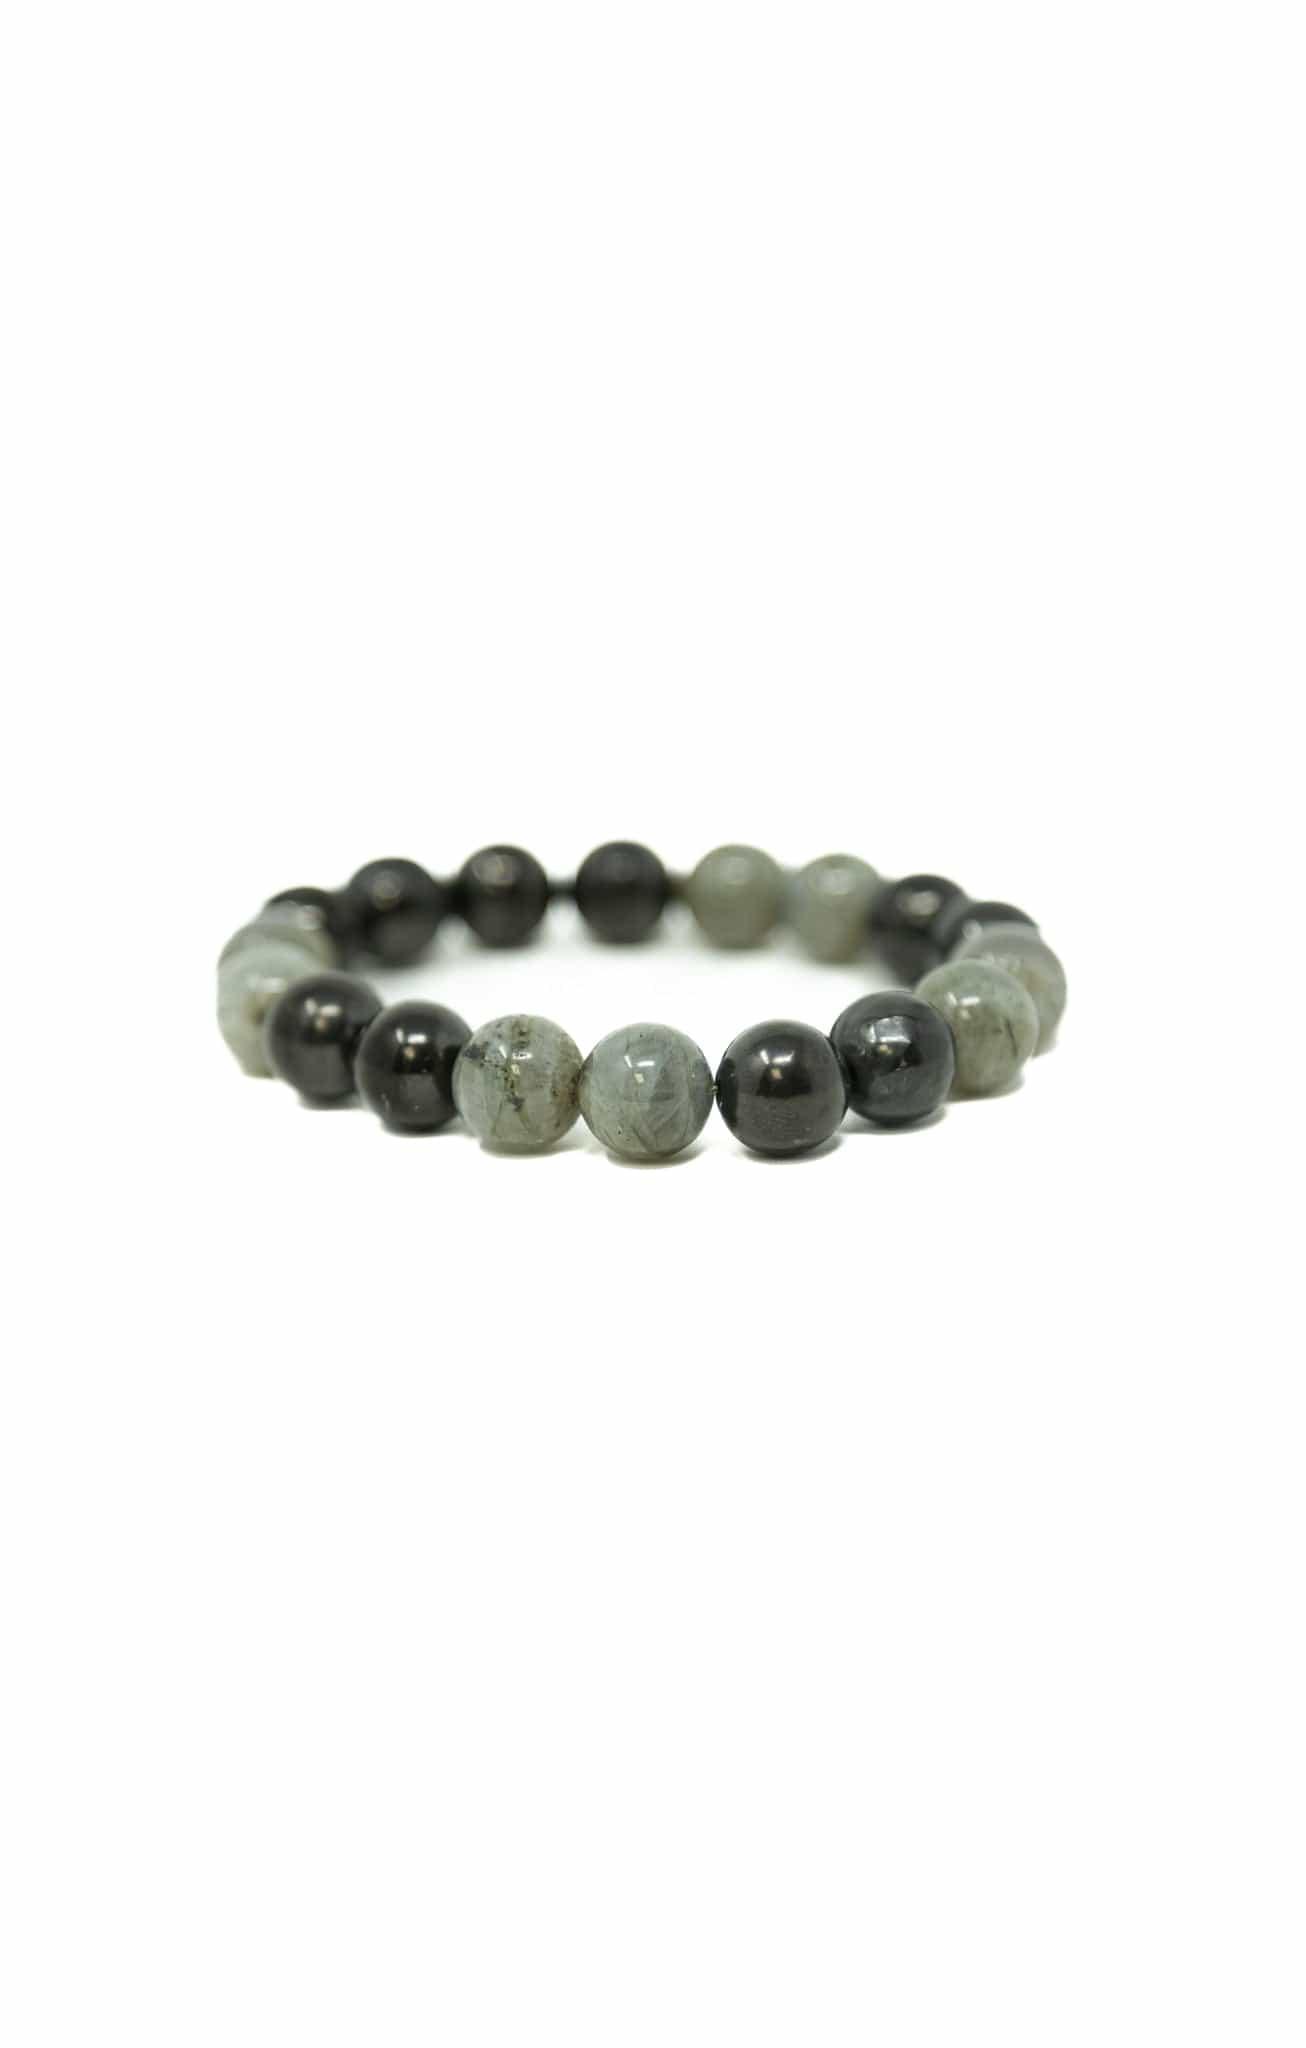 Shungite and Labradorite Mix Bracelet Round Beads 10mm